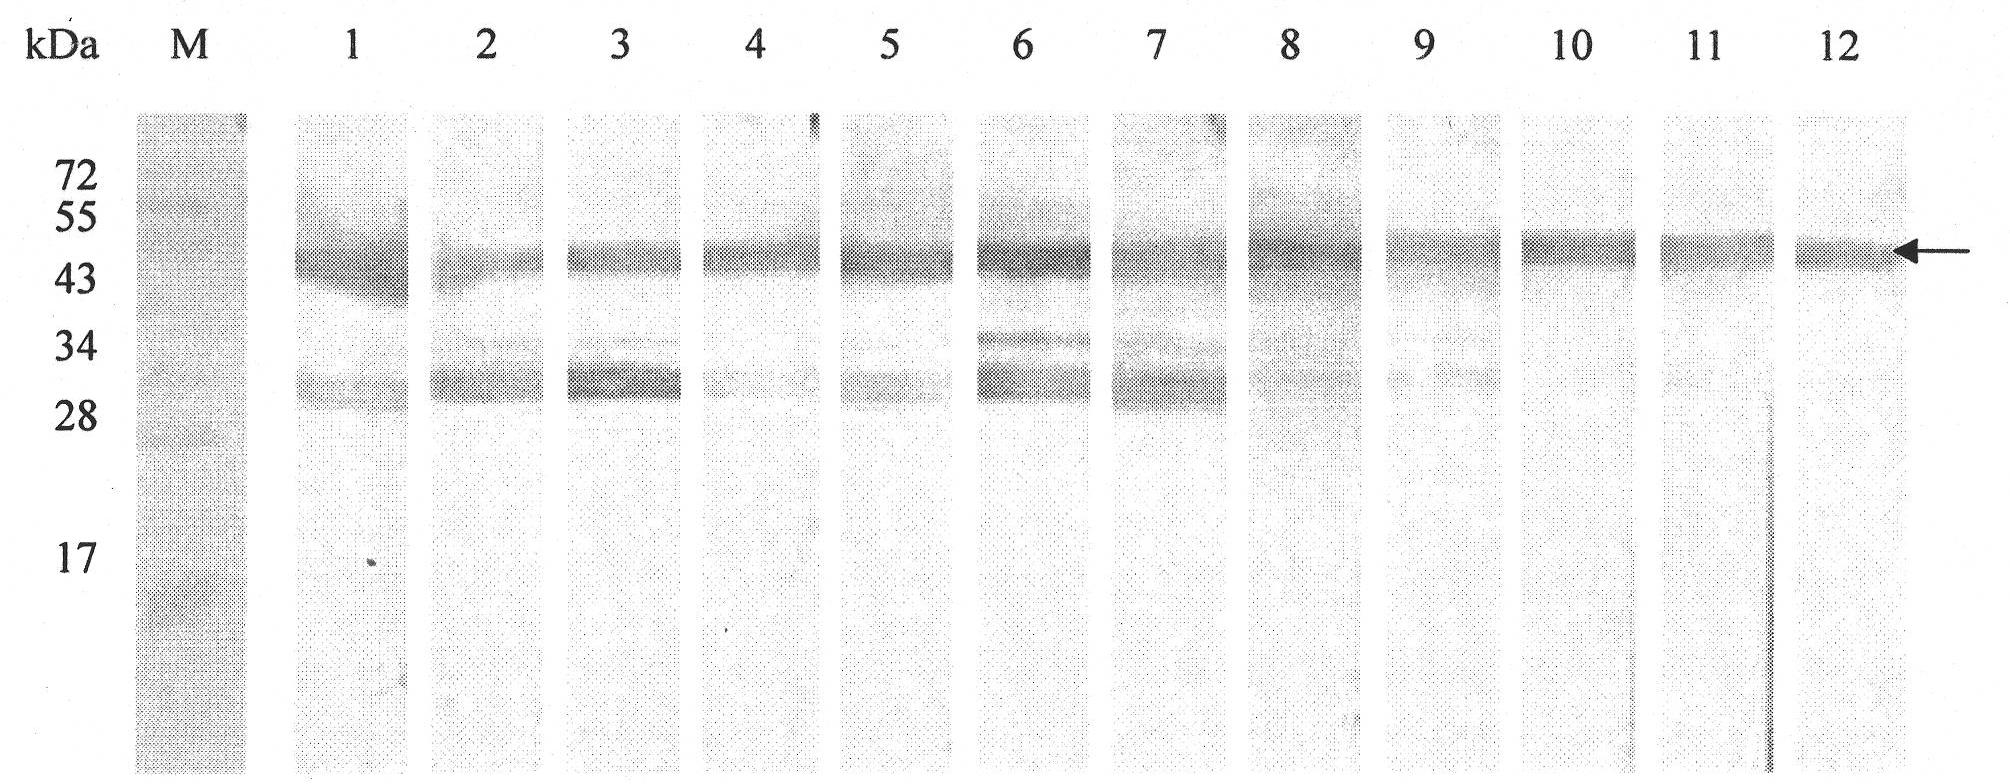 Anti-Pf332-DBL region monoclonal antibody capable of restraining invasion of plasmodiumfalciparum